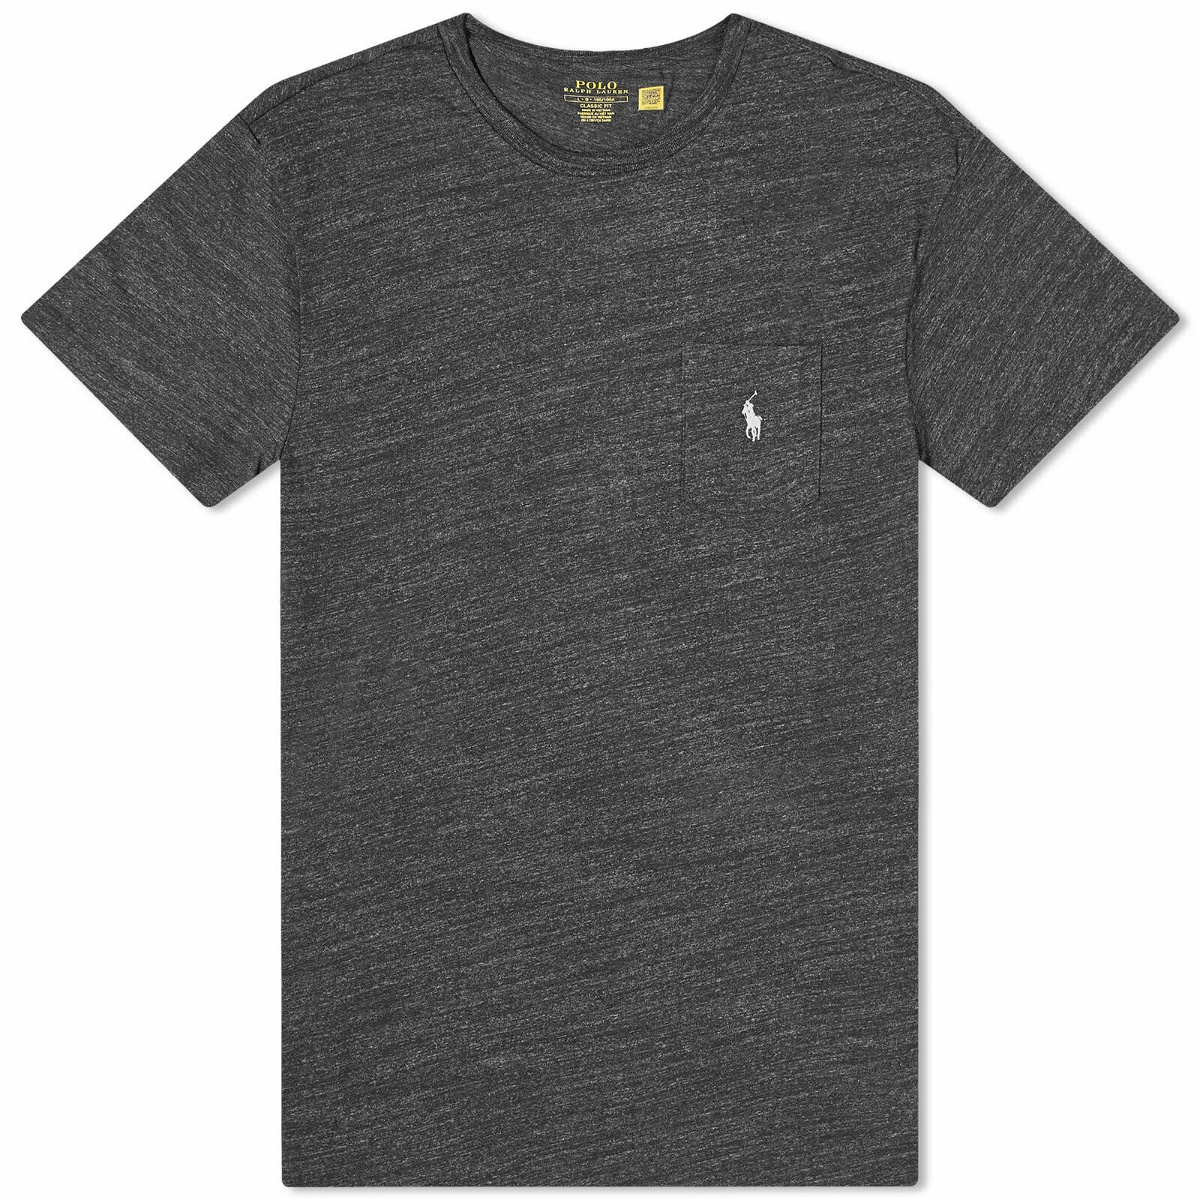 Order Polo Ralph Lauren T-Shirt black marl heather T-Shirts from